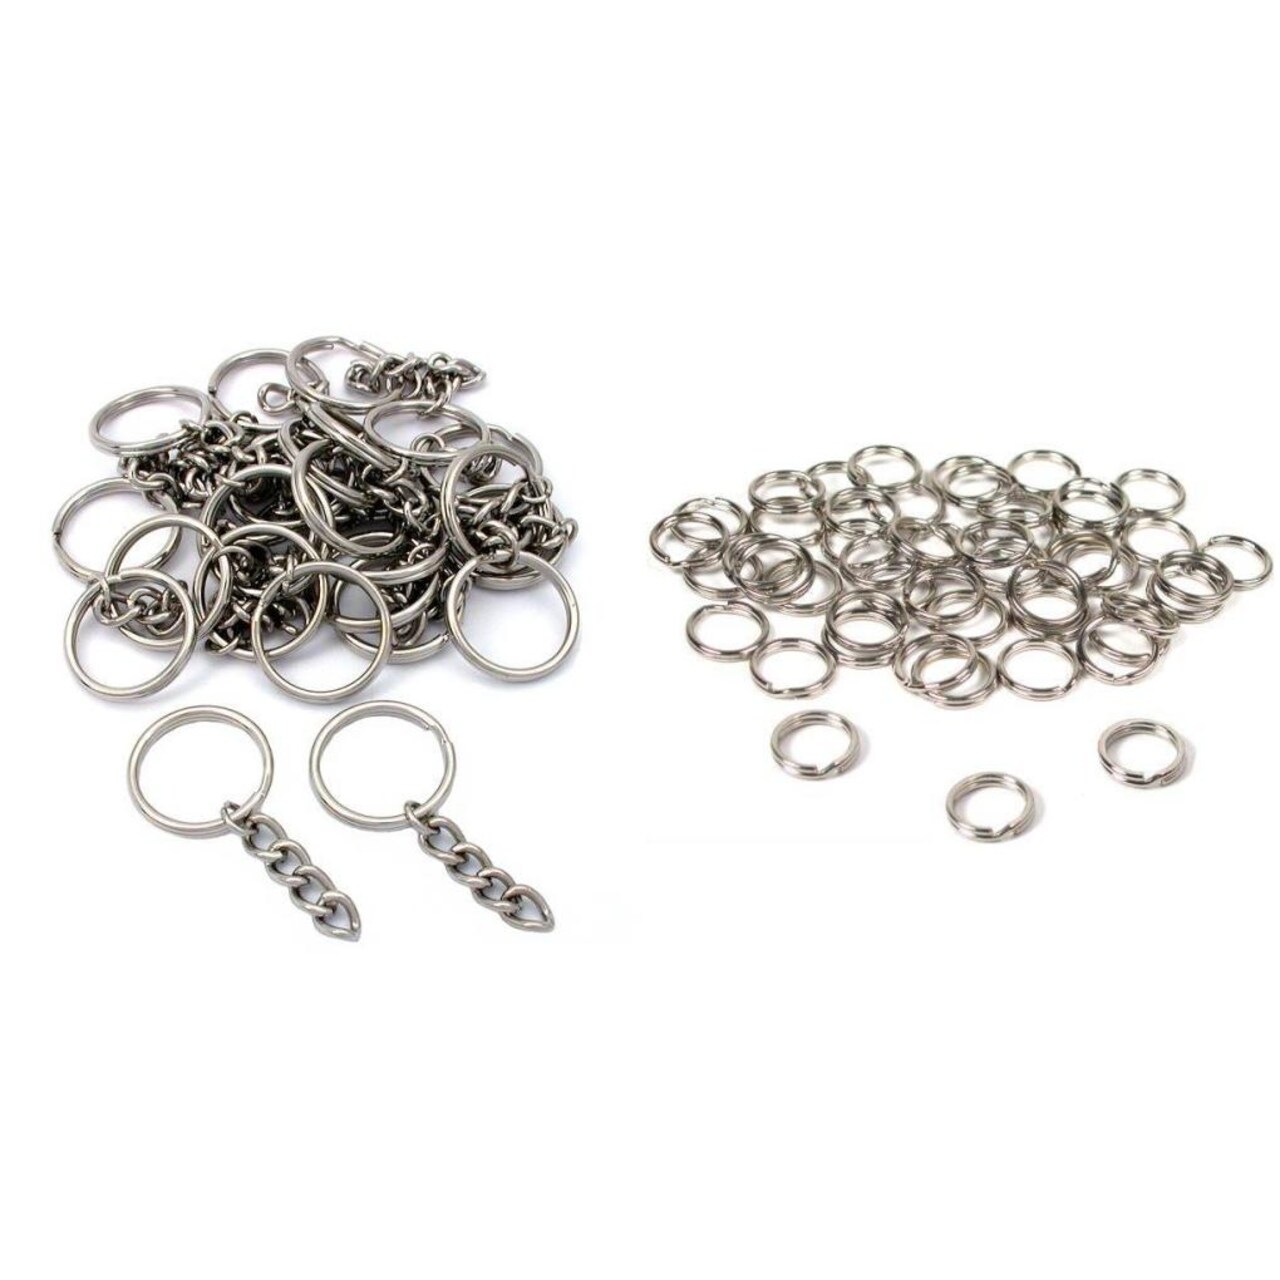 Nickel Plated Key Chain Rings W/ Chain & Split Rings Jewelry